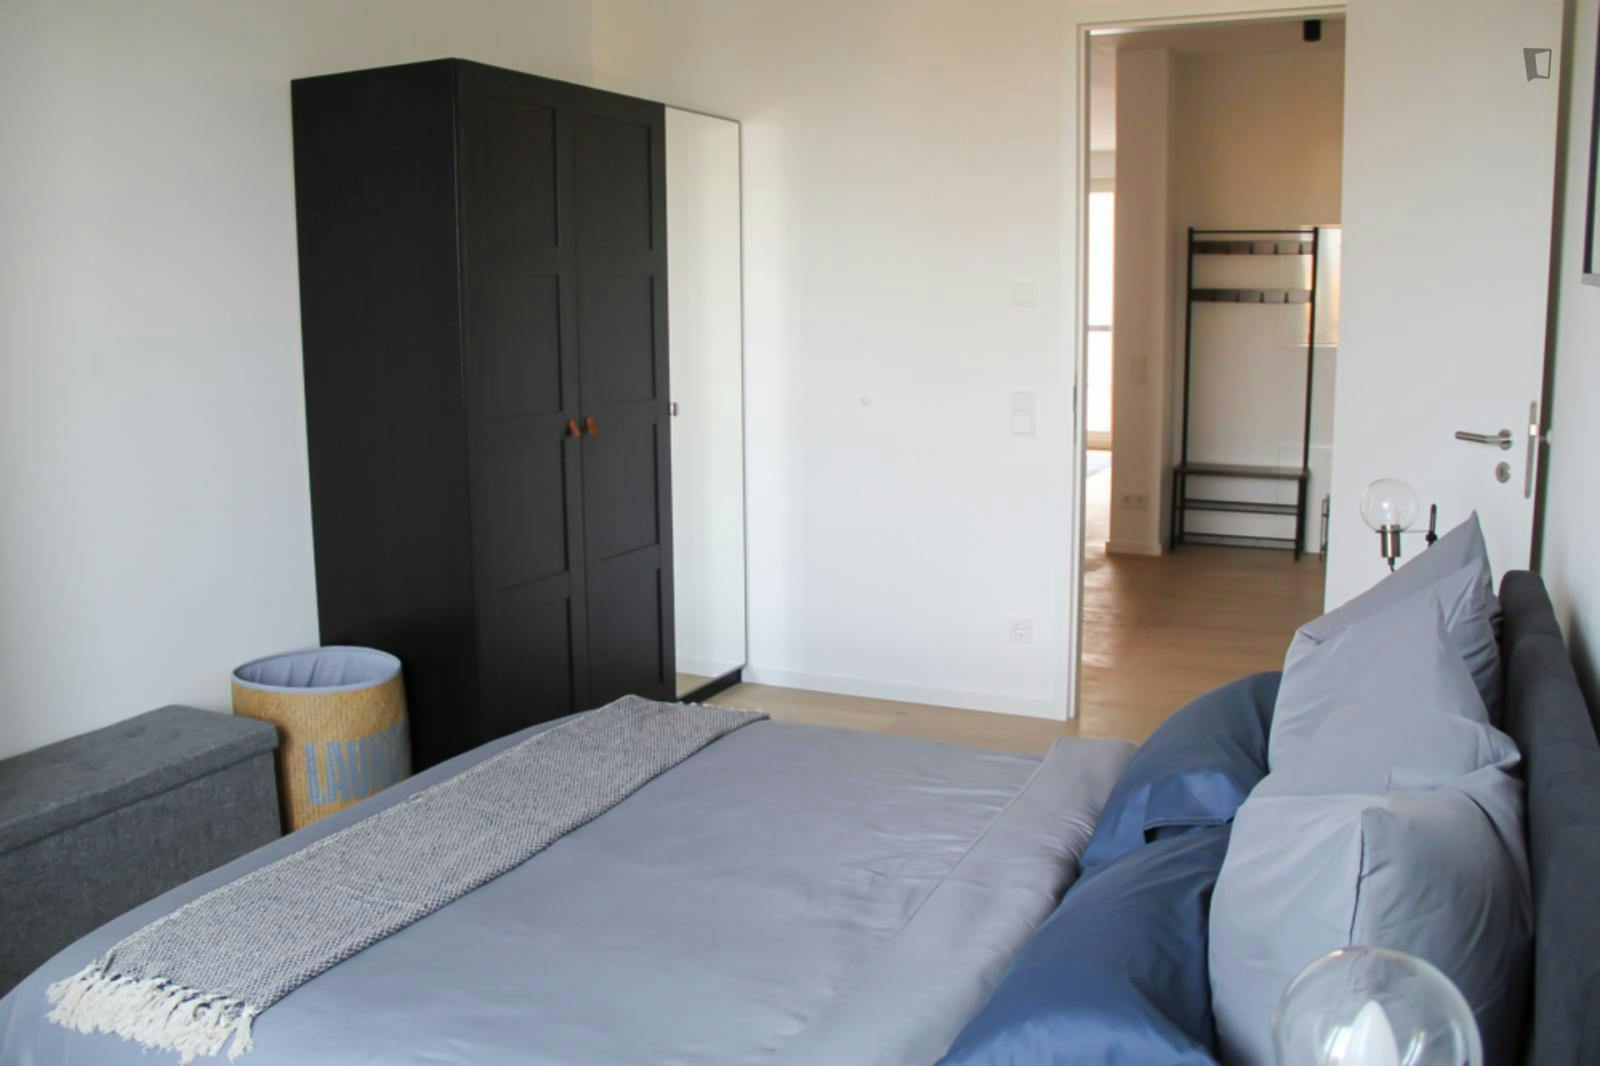 Bright 1-bedroom apartment close to Bornholmer Straße metro station